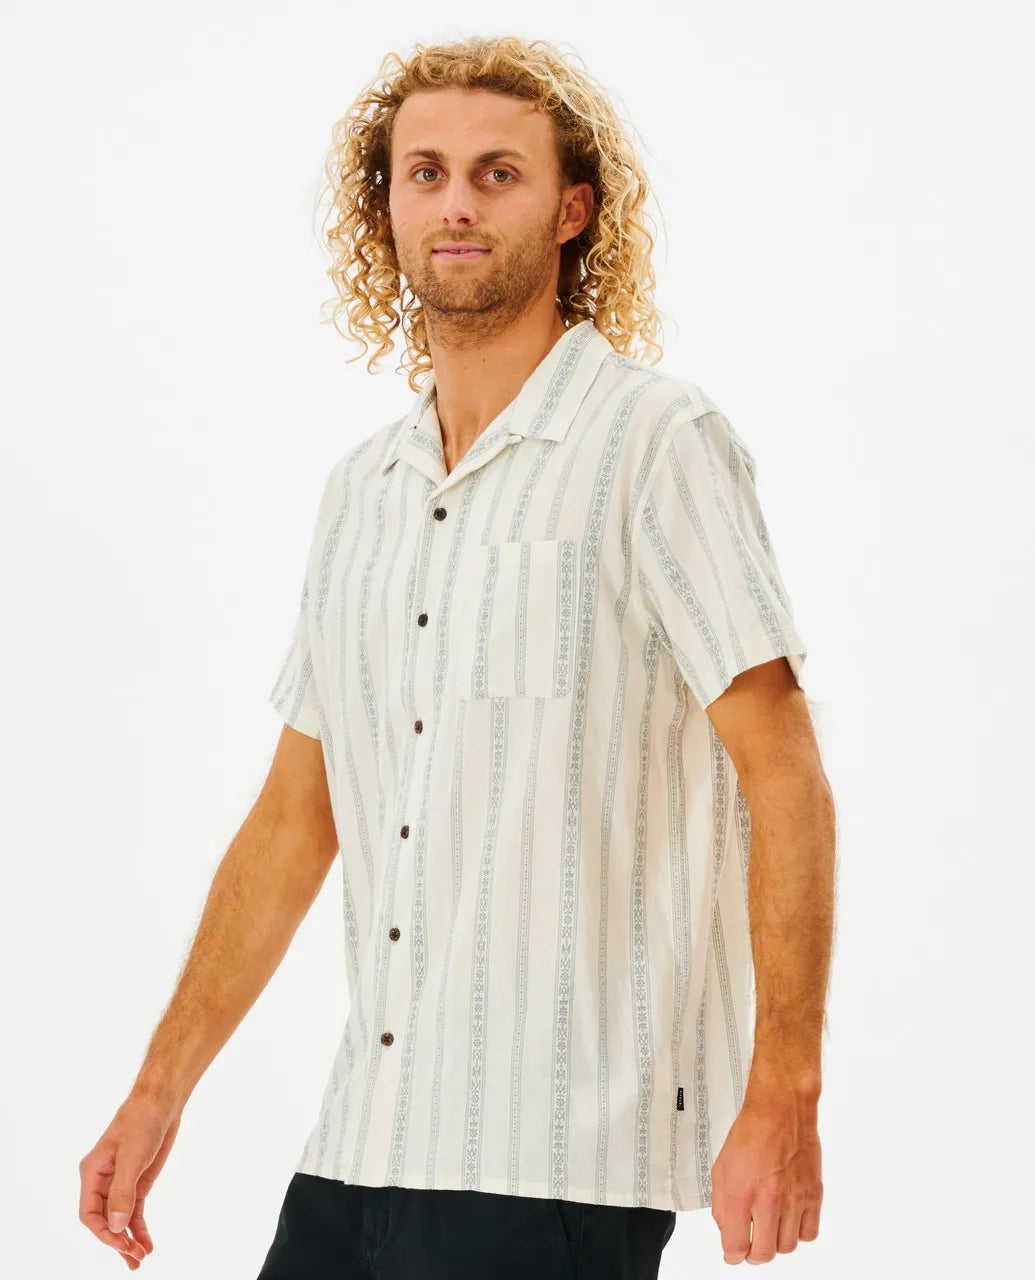 Verty Gordo Short Sleeve Shirt - Rip Curl - Beechworth Emporium